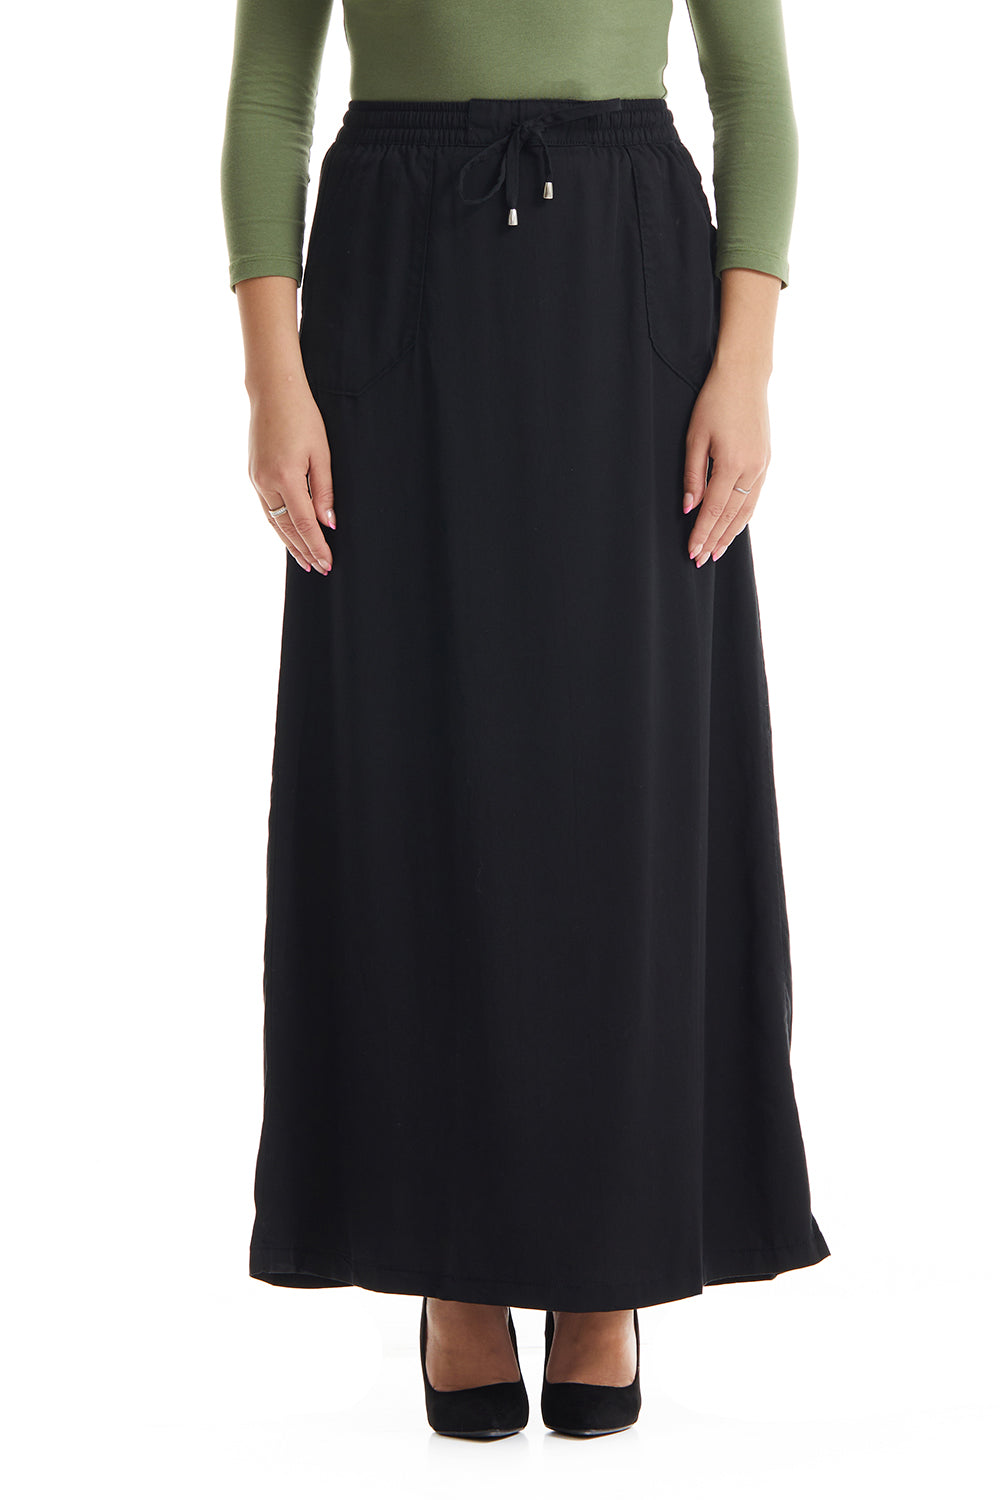 Esteez ATLANTA skirt - Modest Maxi Skirt for Women 100% Tencel